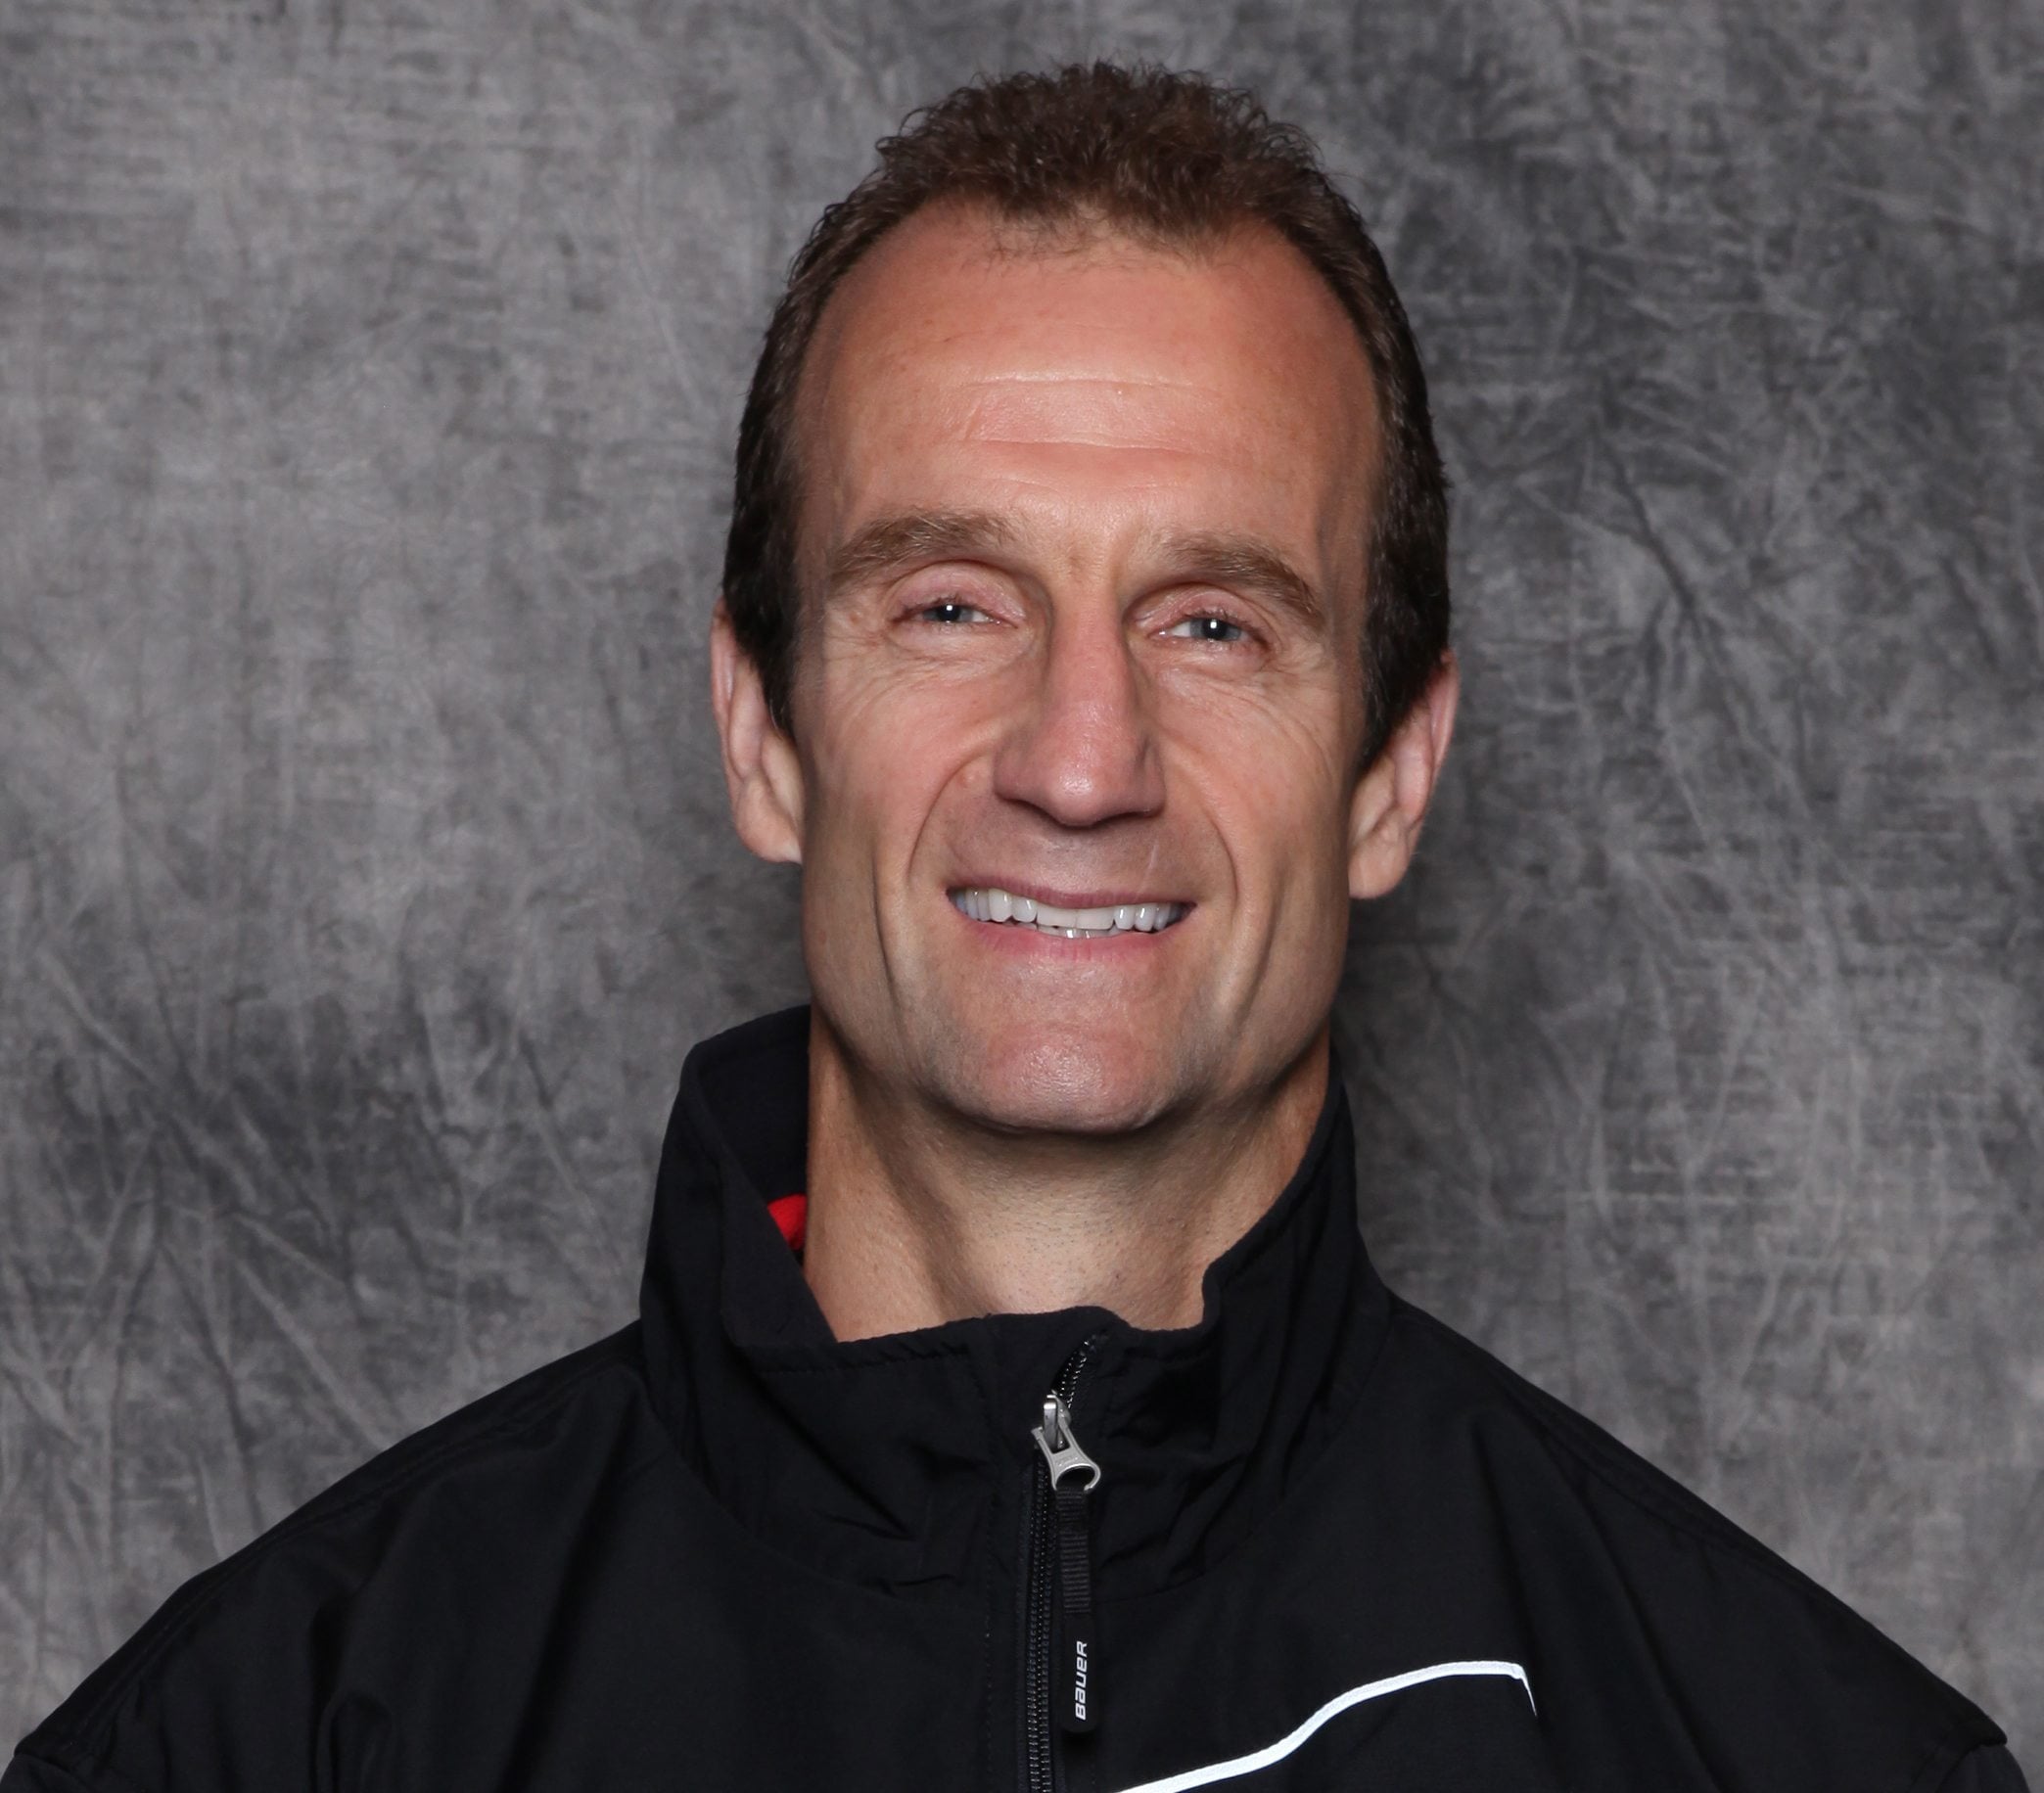 Portland Winterhawks coach and general manager Jamie Kompon